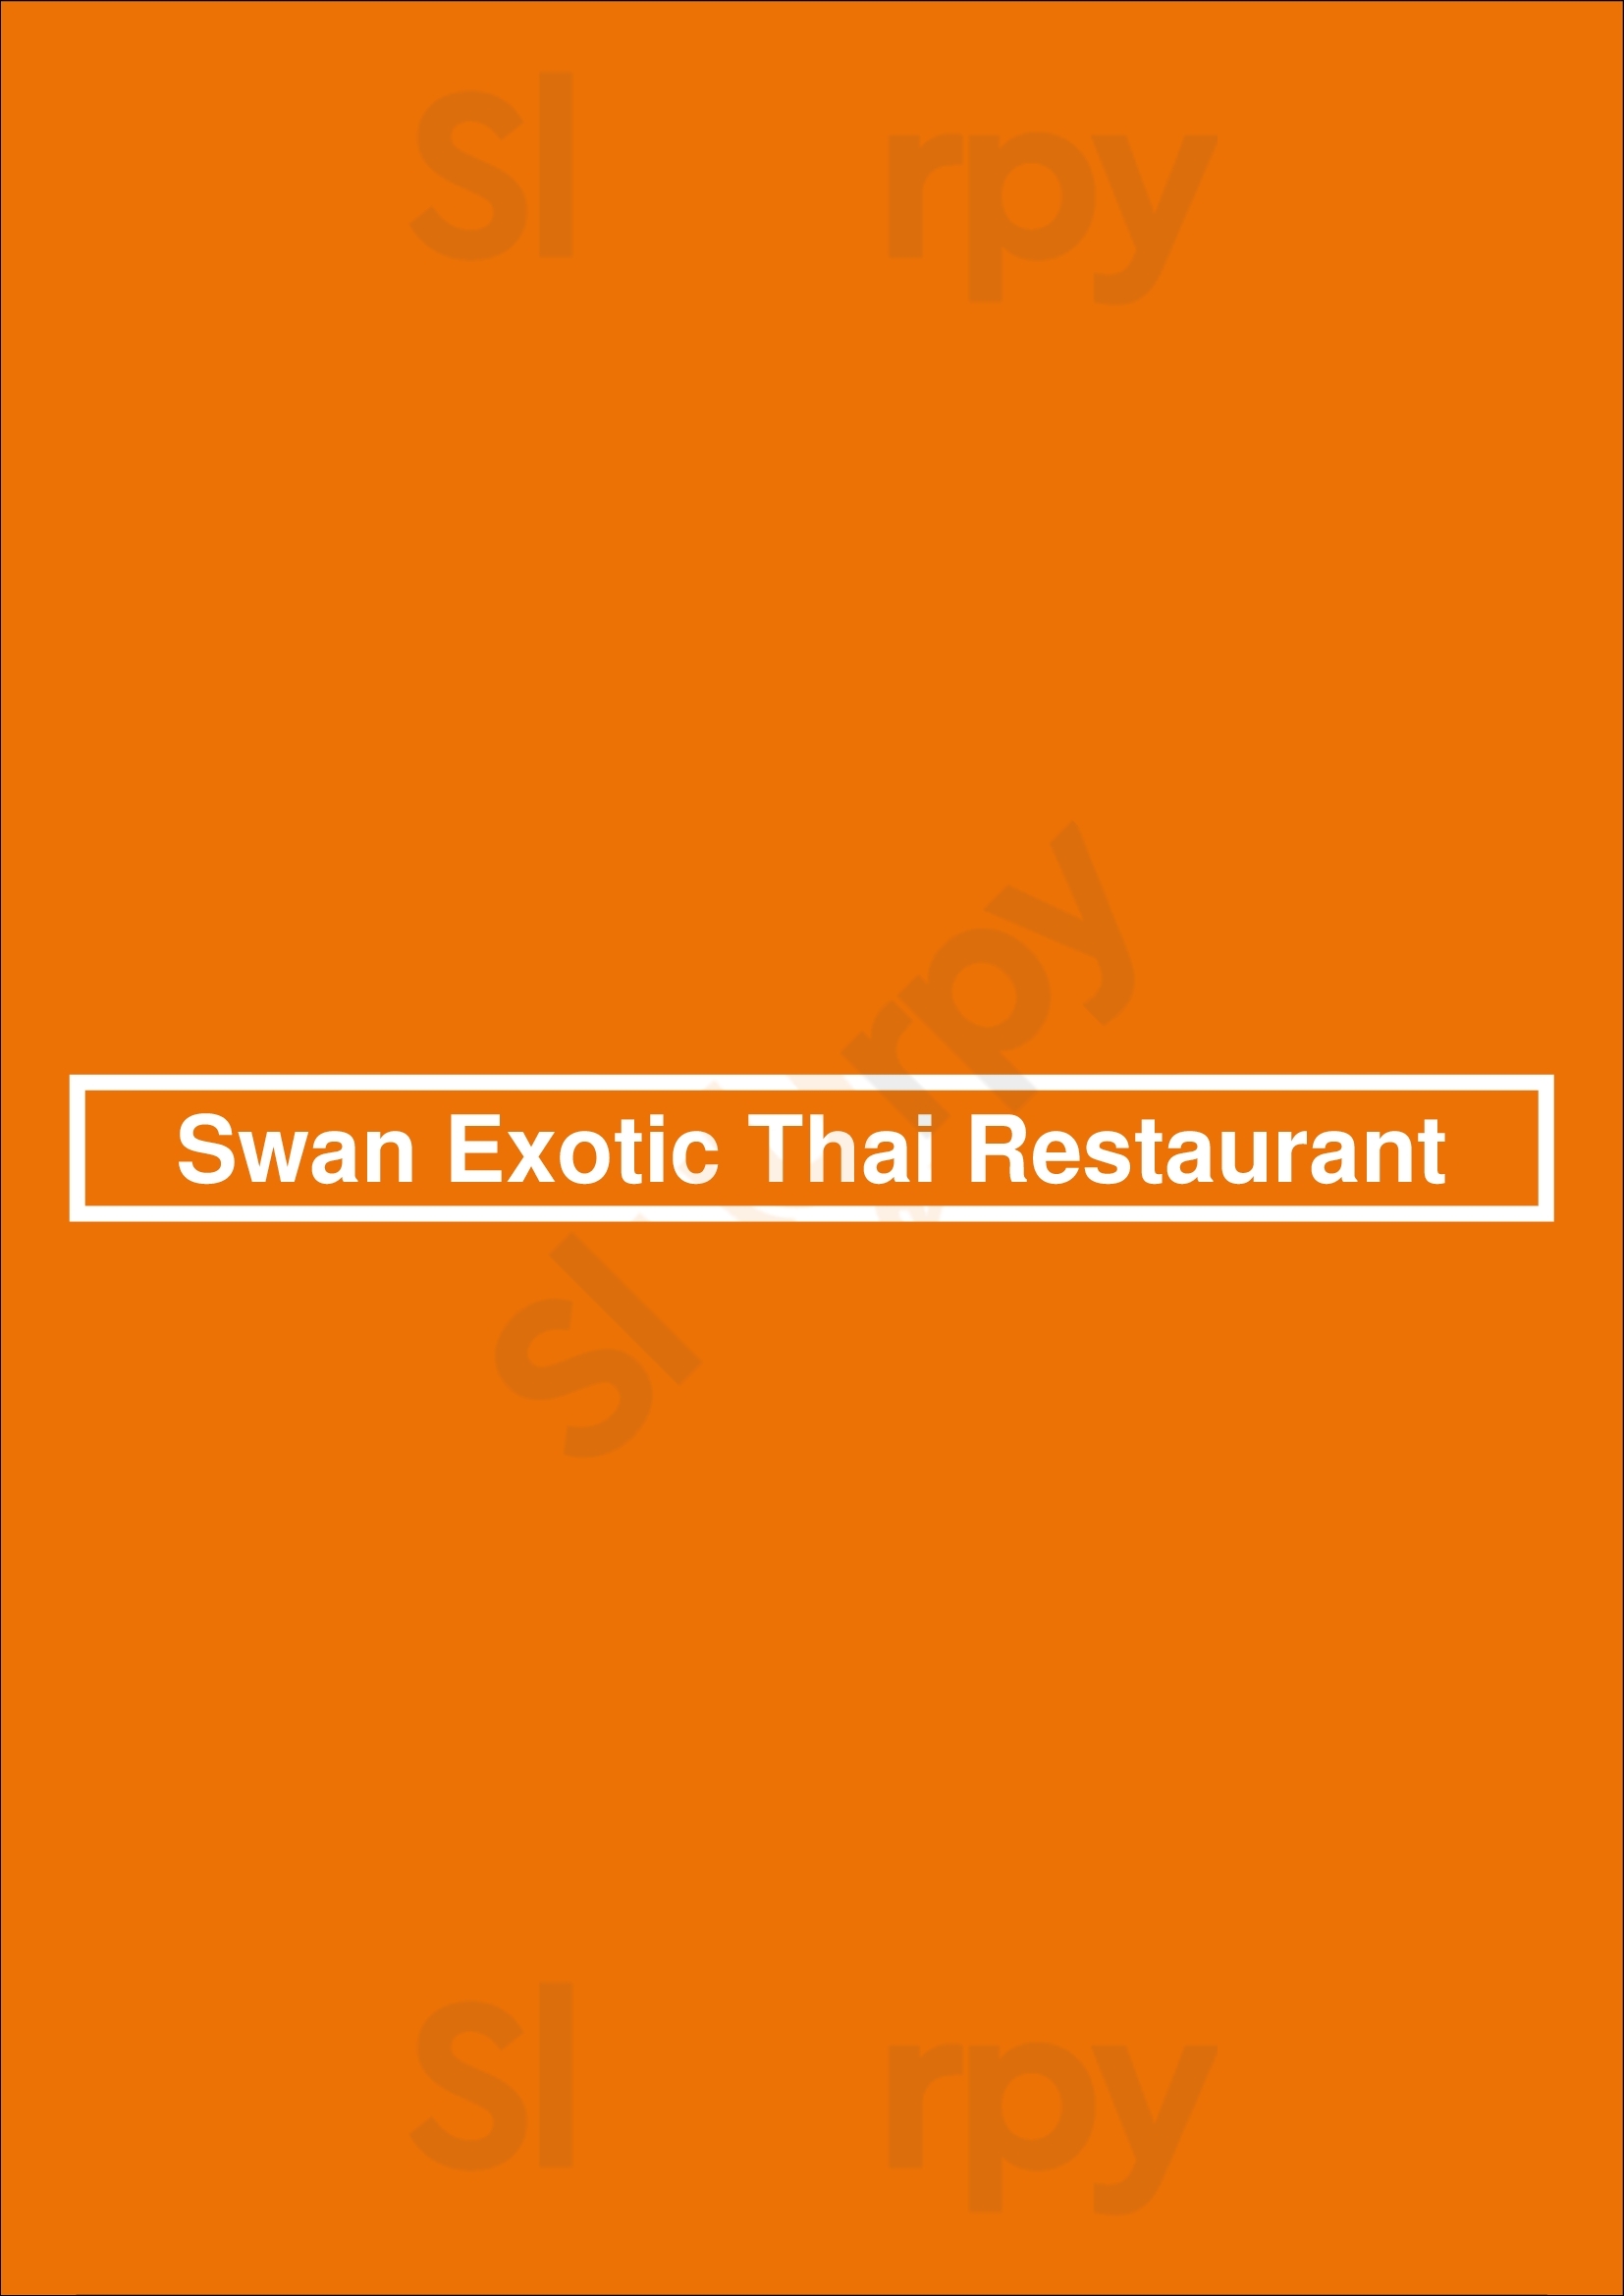 Swan Exotic Thai Restaurant Los Angeles Menu - 1